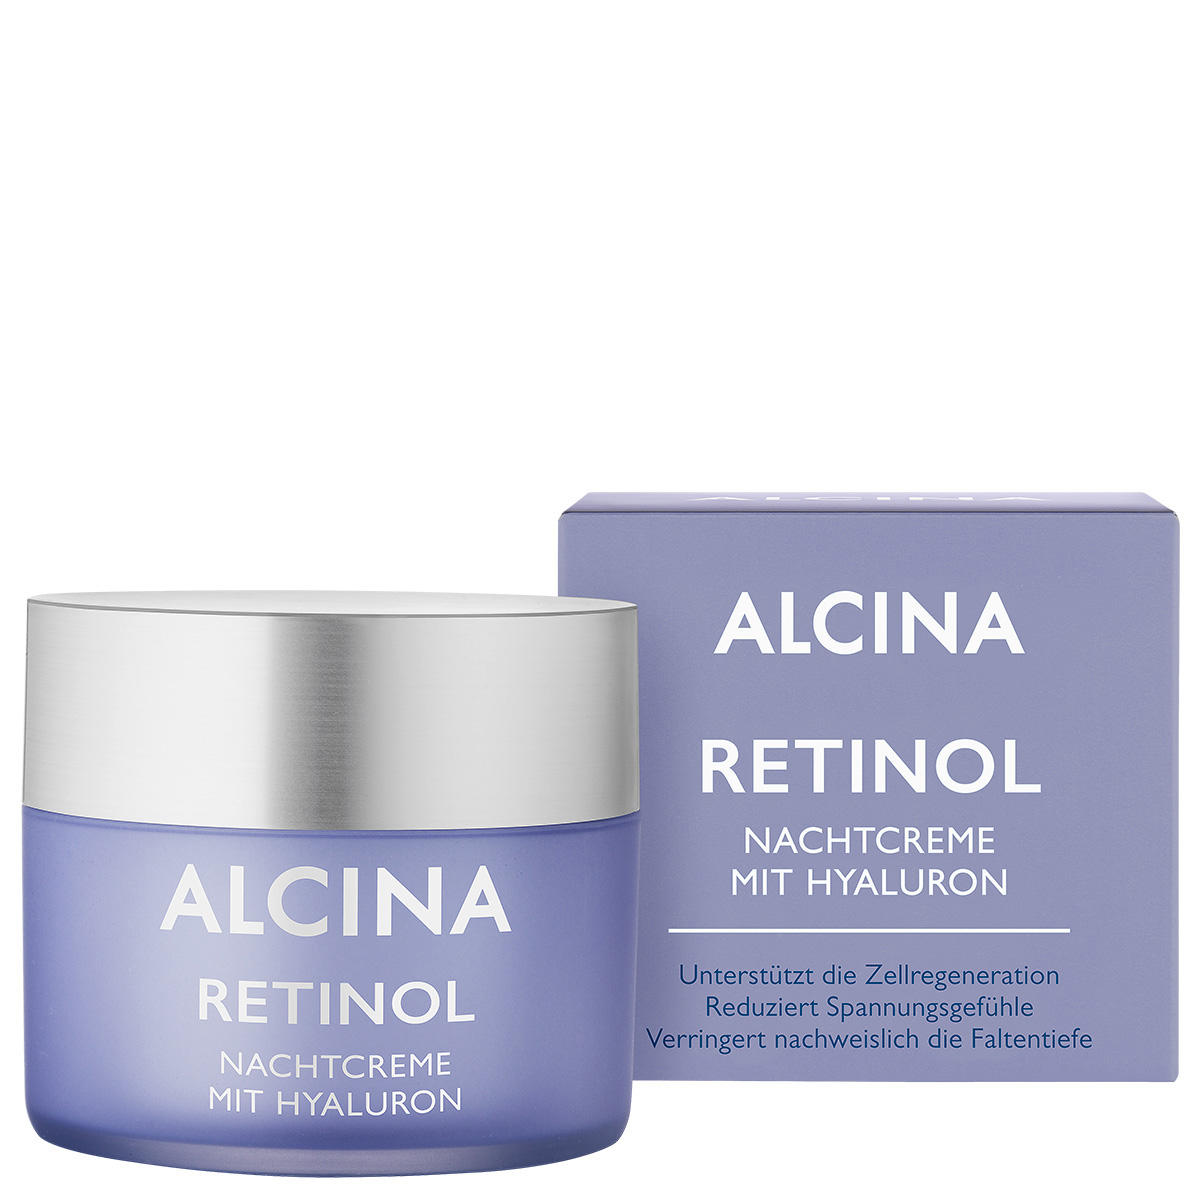 Alcina Retinol Nachtcrème 50 ml - 1